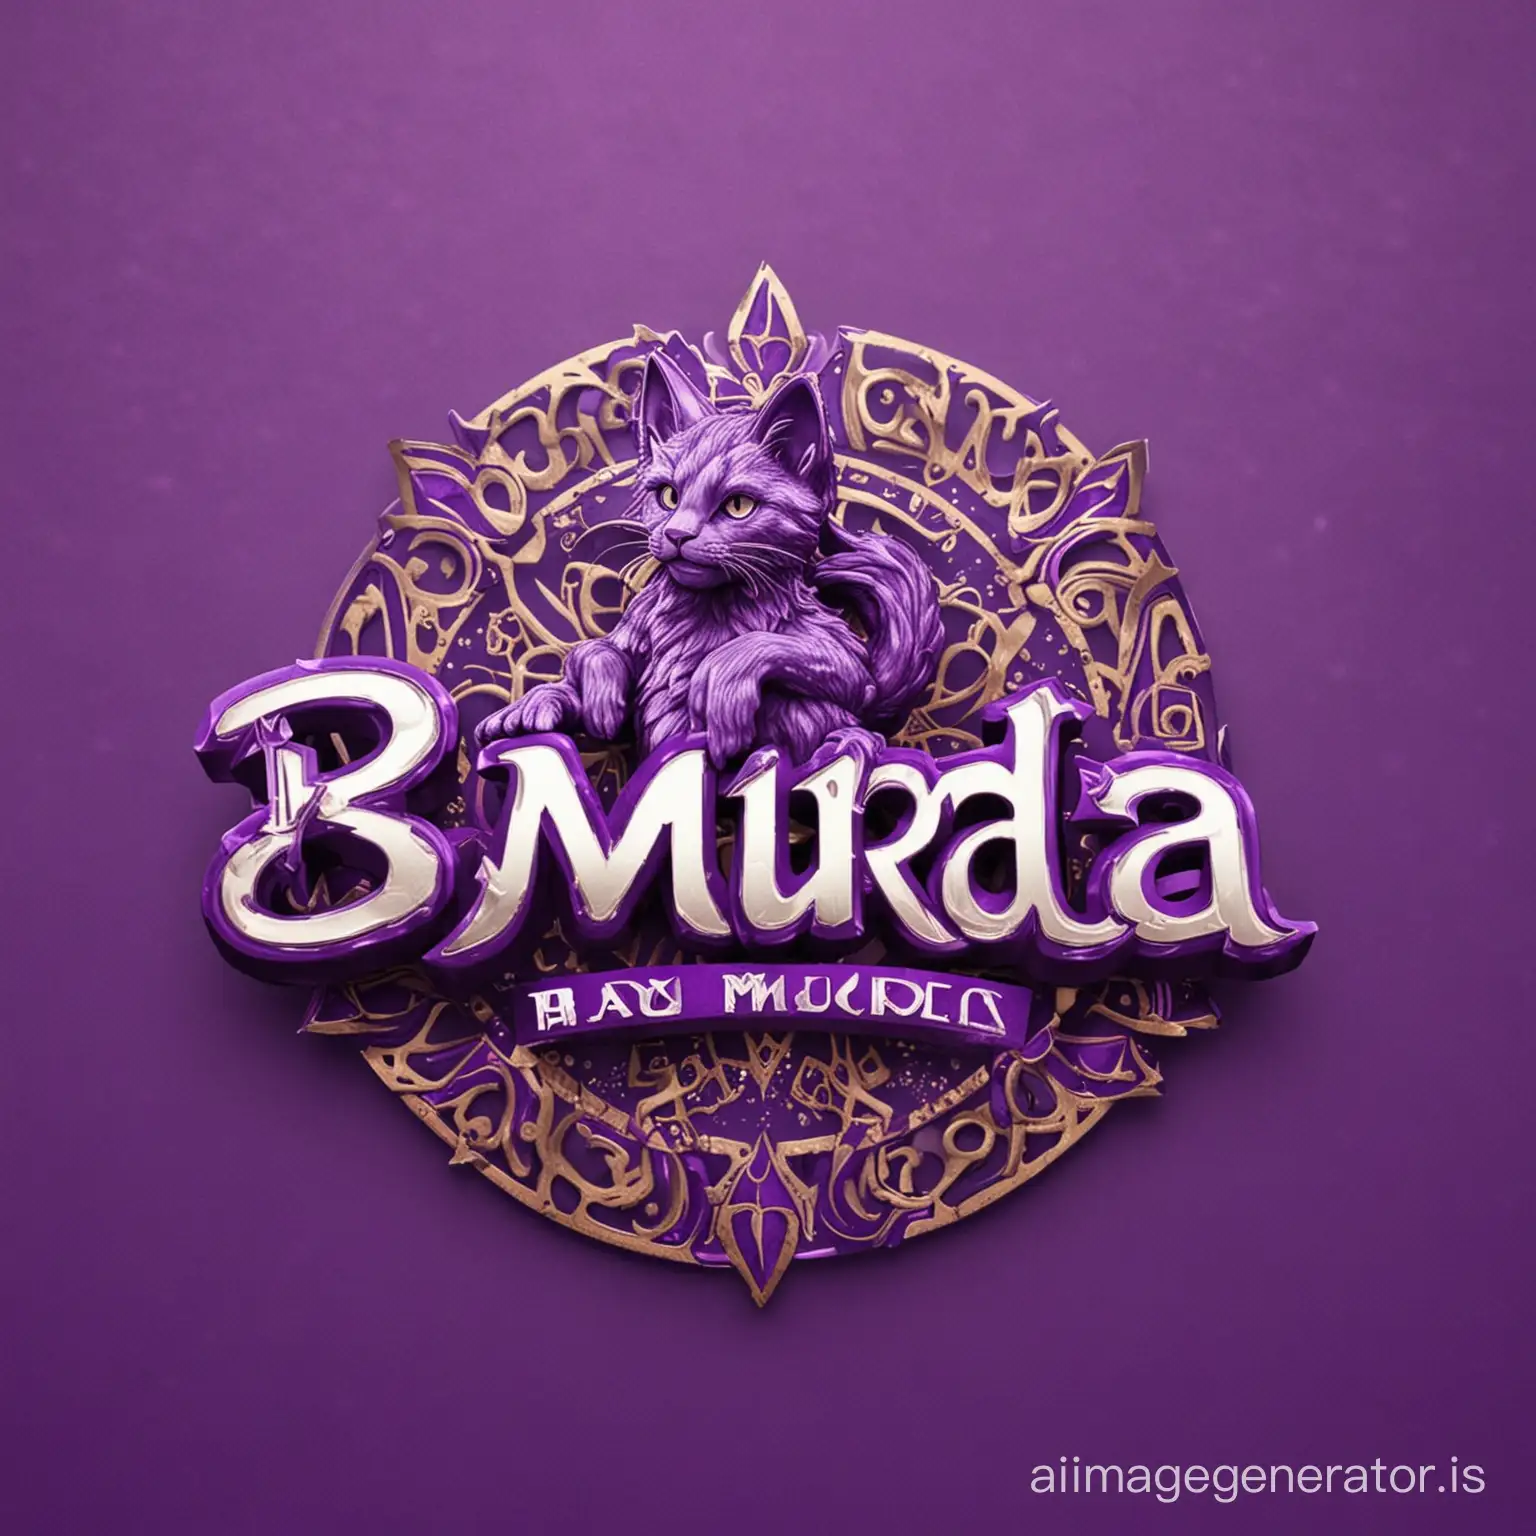 Create branding logo for "B. Murda" Make the logo a purrple metallic 3-D image combination of exotic dancing life